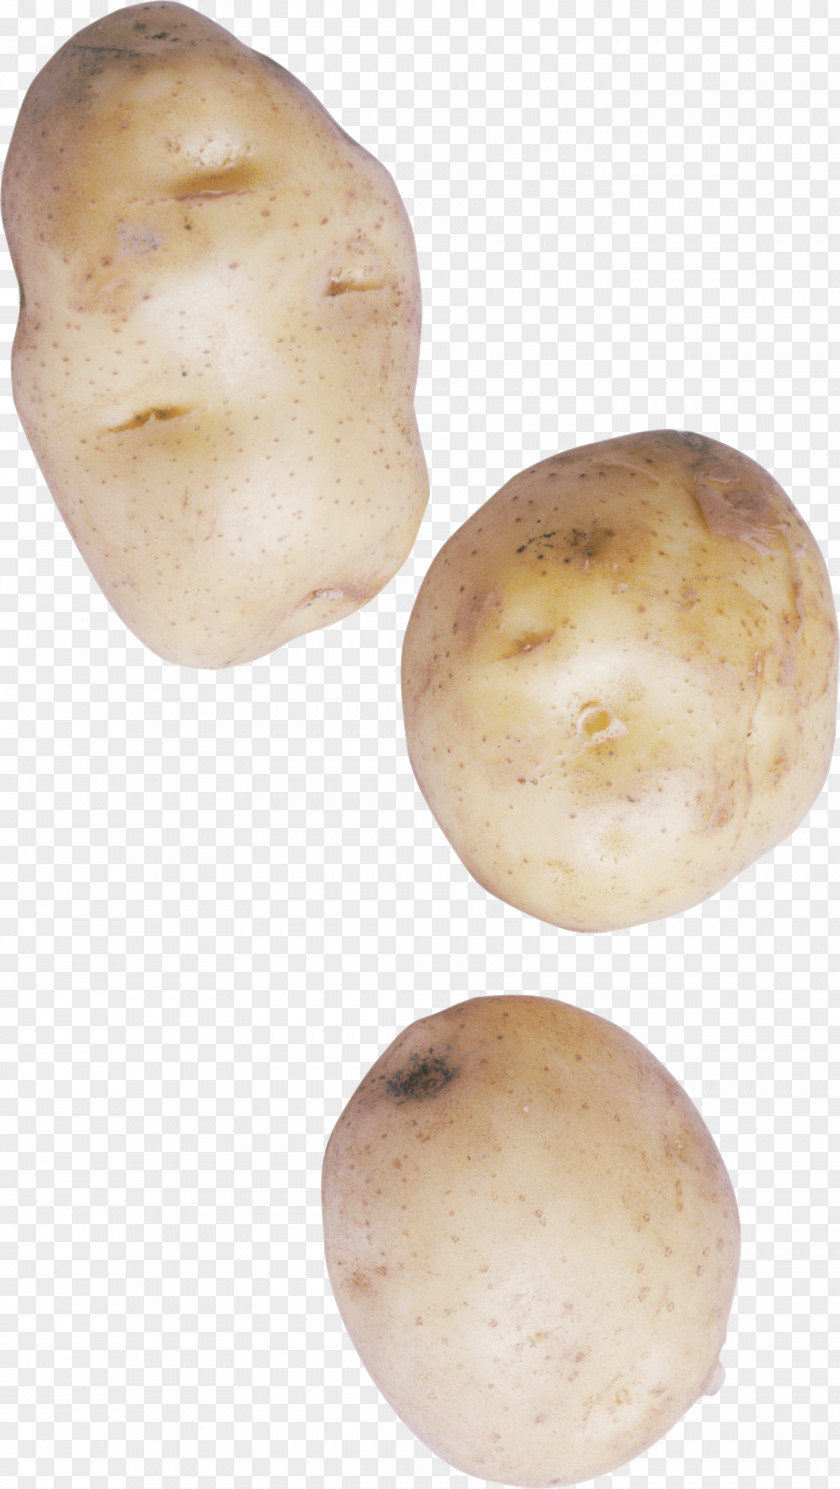 Vegetable Russet Burbank Potato Yukon Gold Tuber Root Vegetables PNG